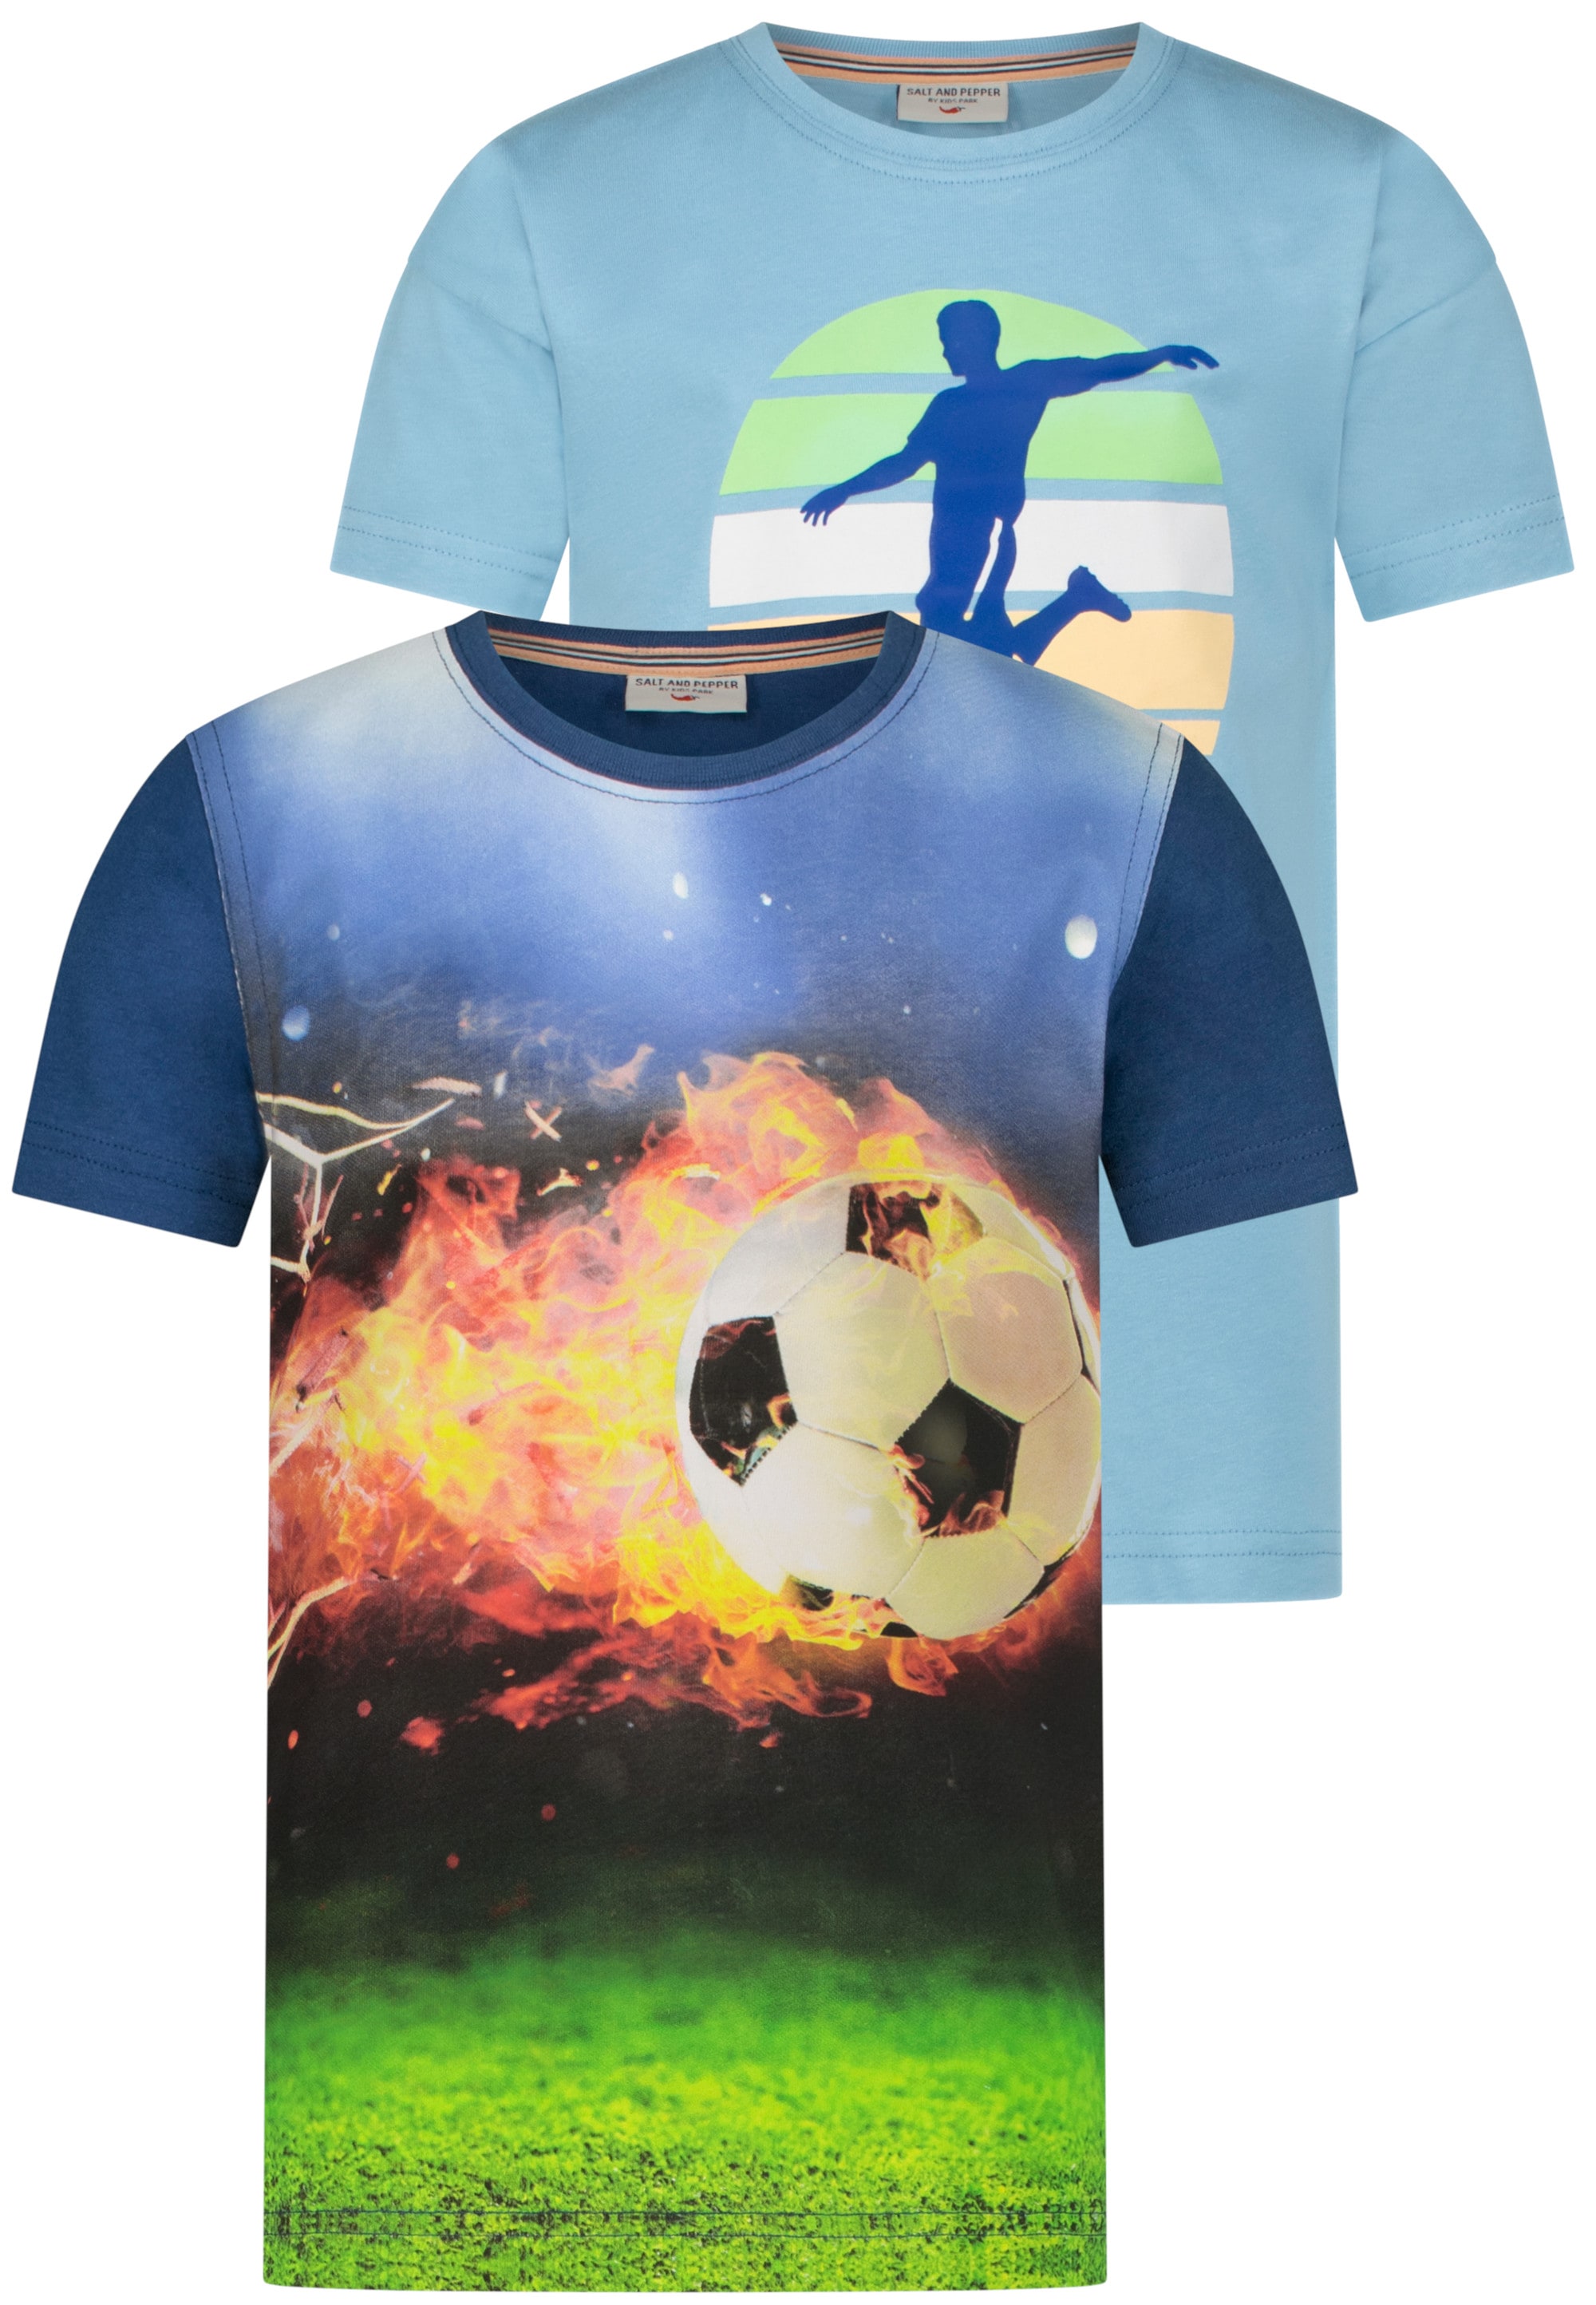 SALT AND BAUR (2 PEPPER tlg.), tollem mit Fußballmotiv | T-Shirt kaufen »Torjäger«